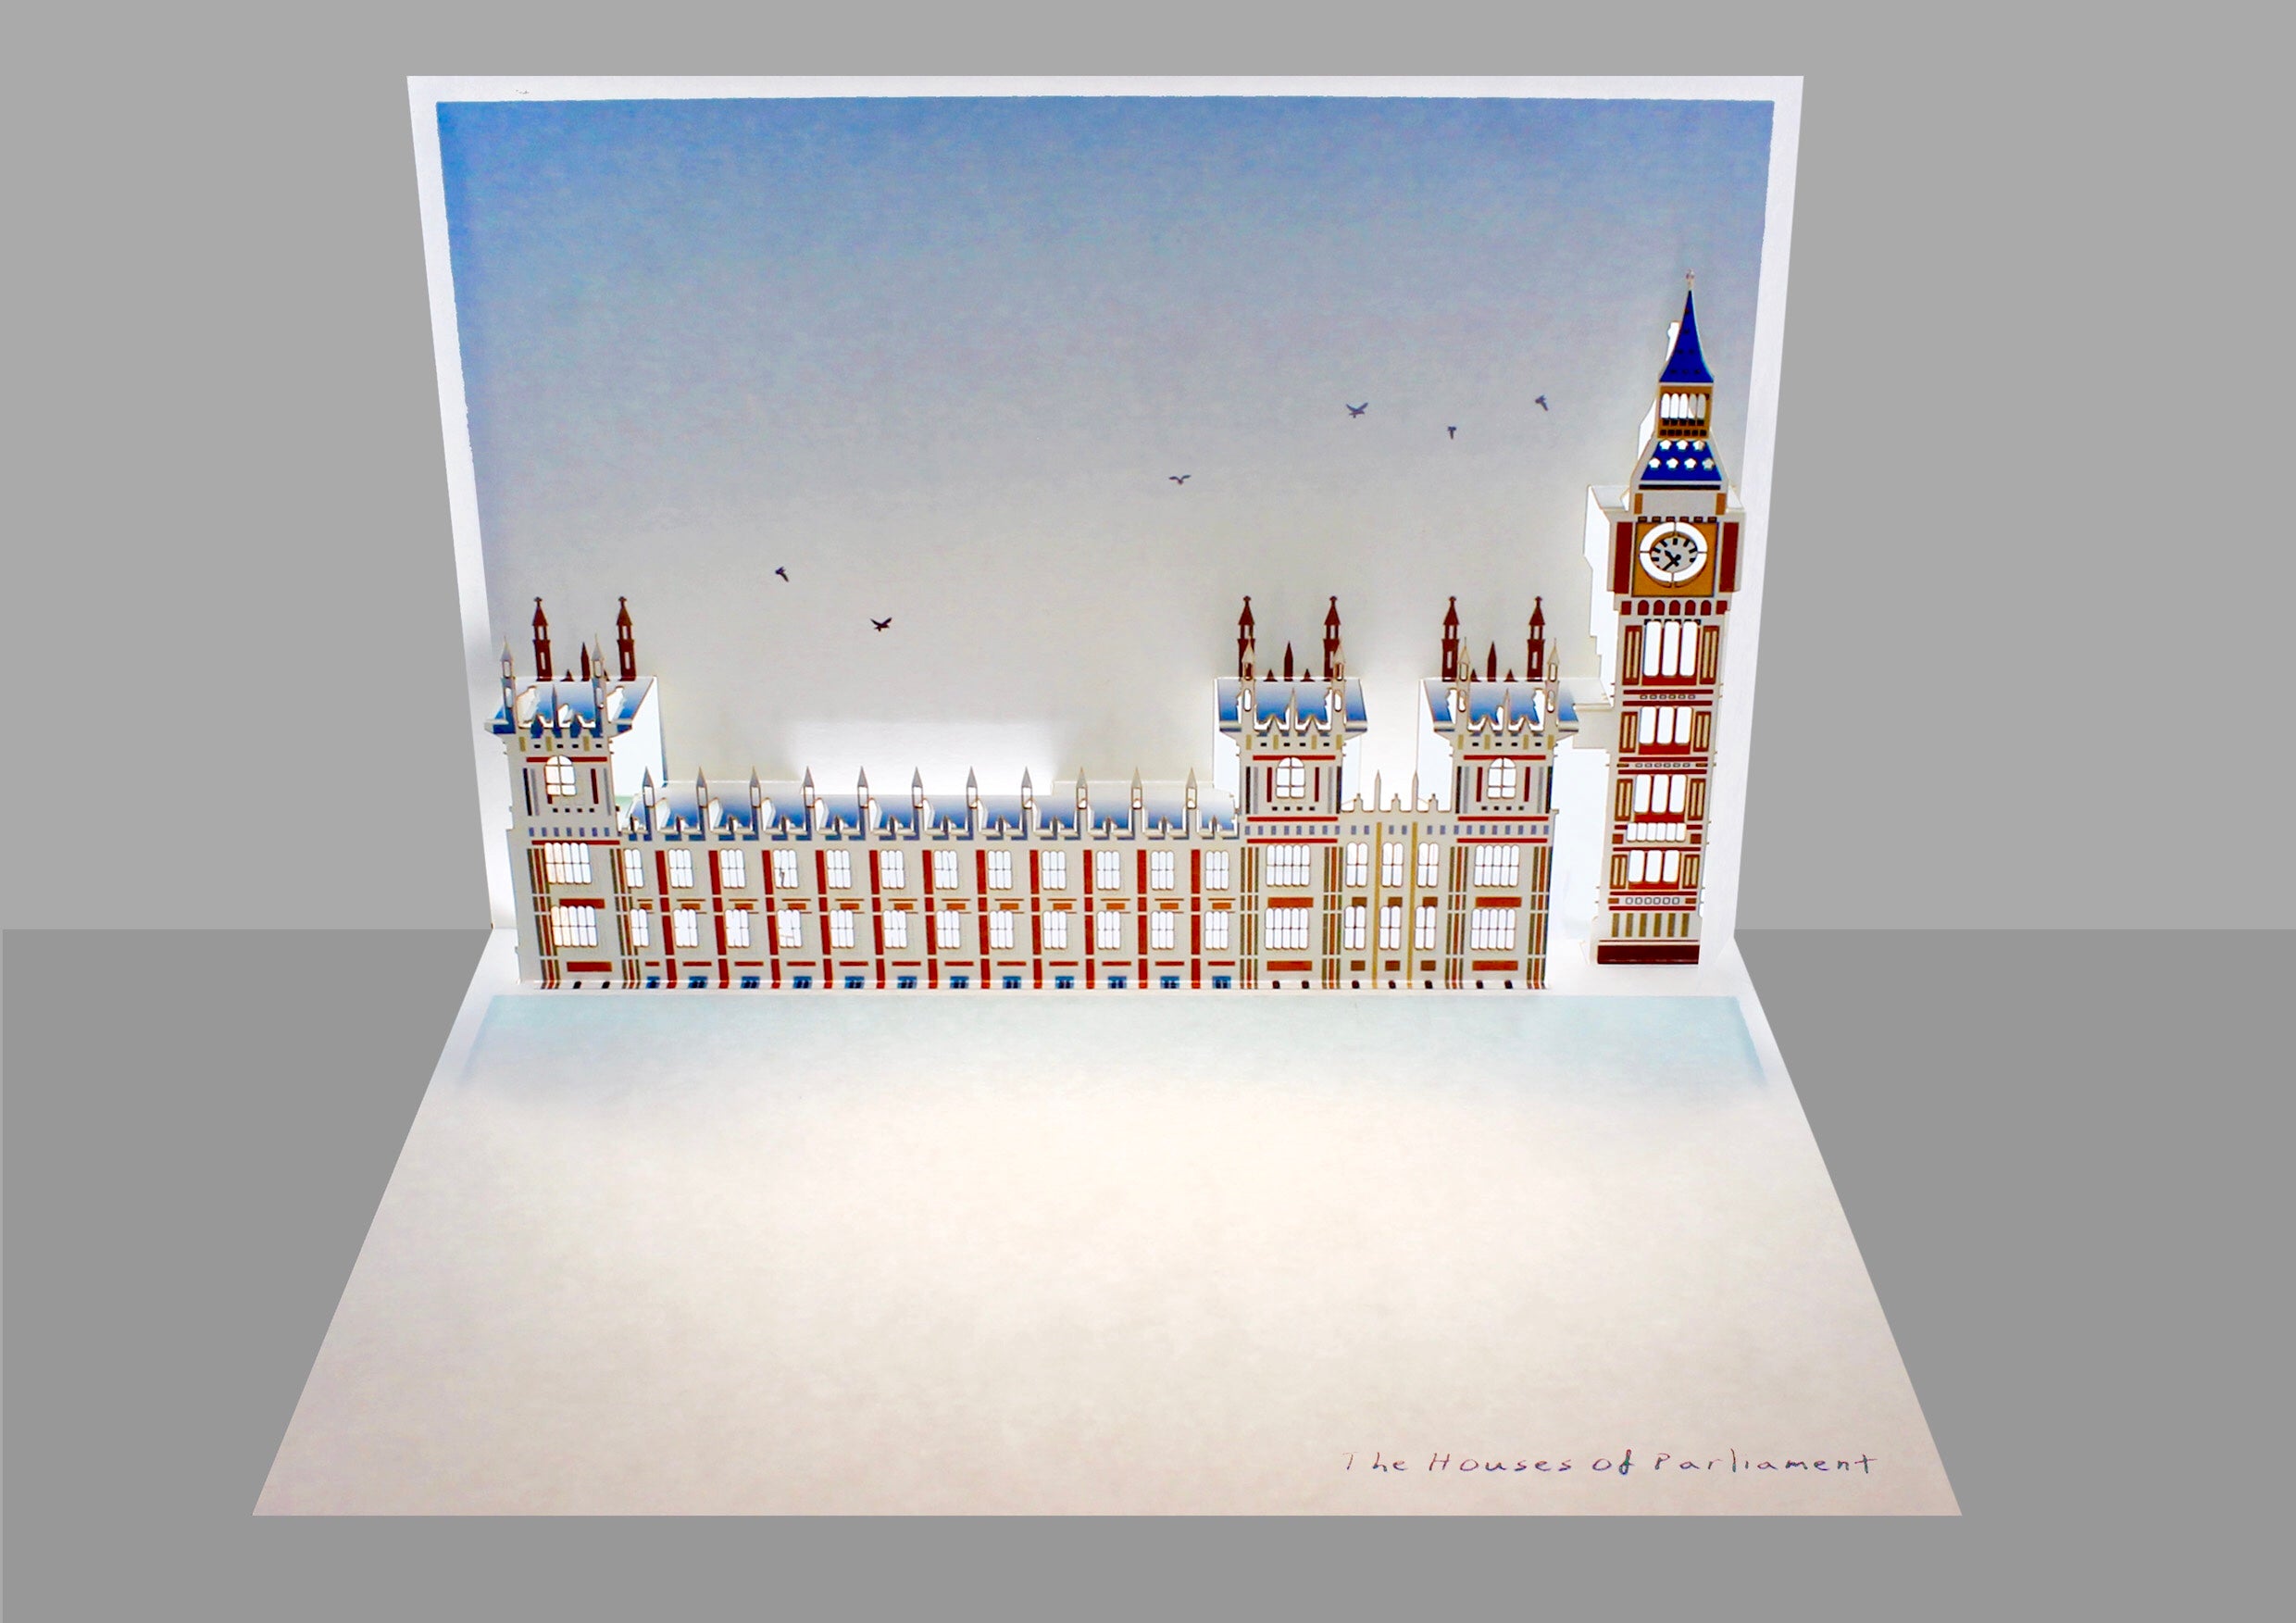 Houses of Parliament & Big Ben Iconic London Landmark 3D Pop Up Birthday Greeting Card